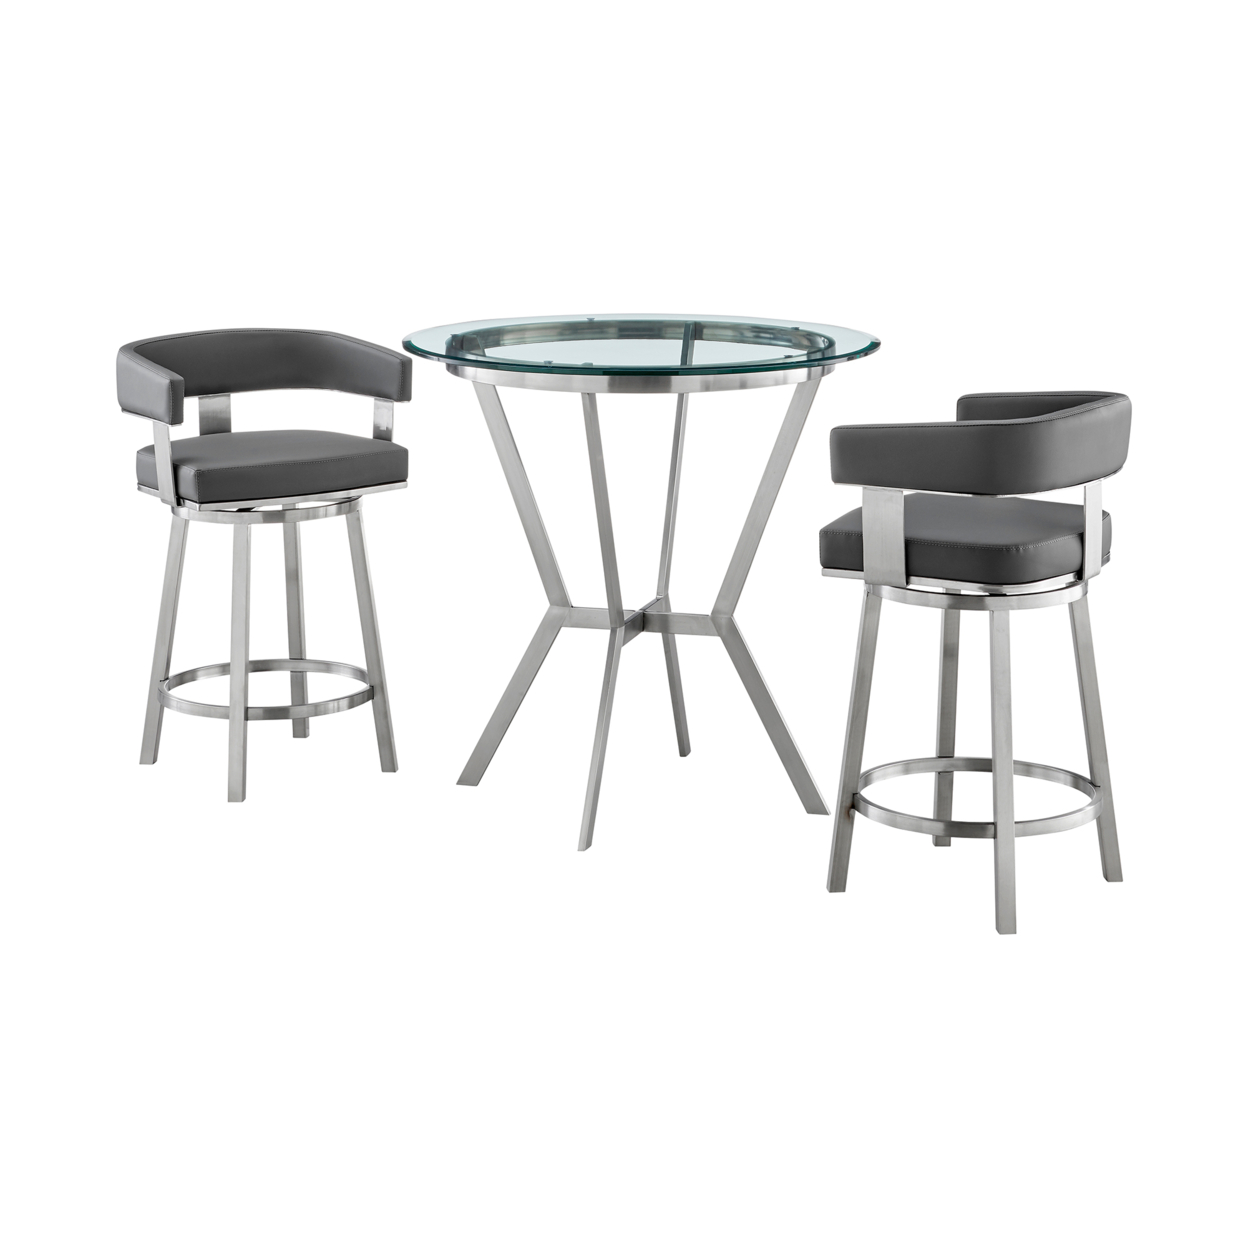 Aliya 3 Piece Counter Height Dining Table Set, Round Glass Top, Gray Silver- Saltoro Sherpi